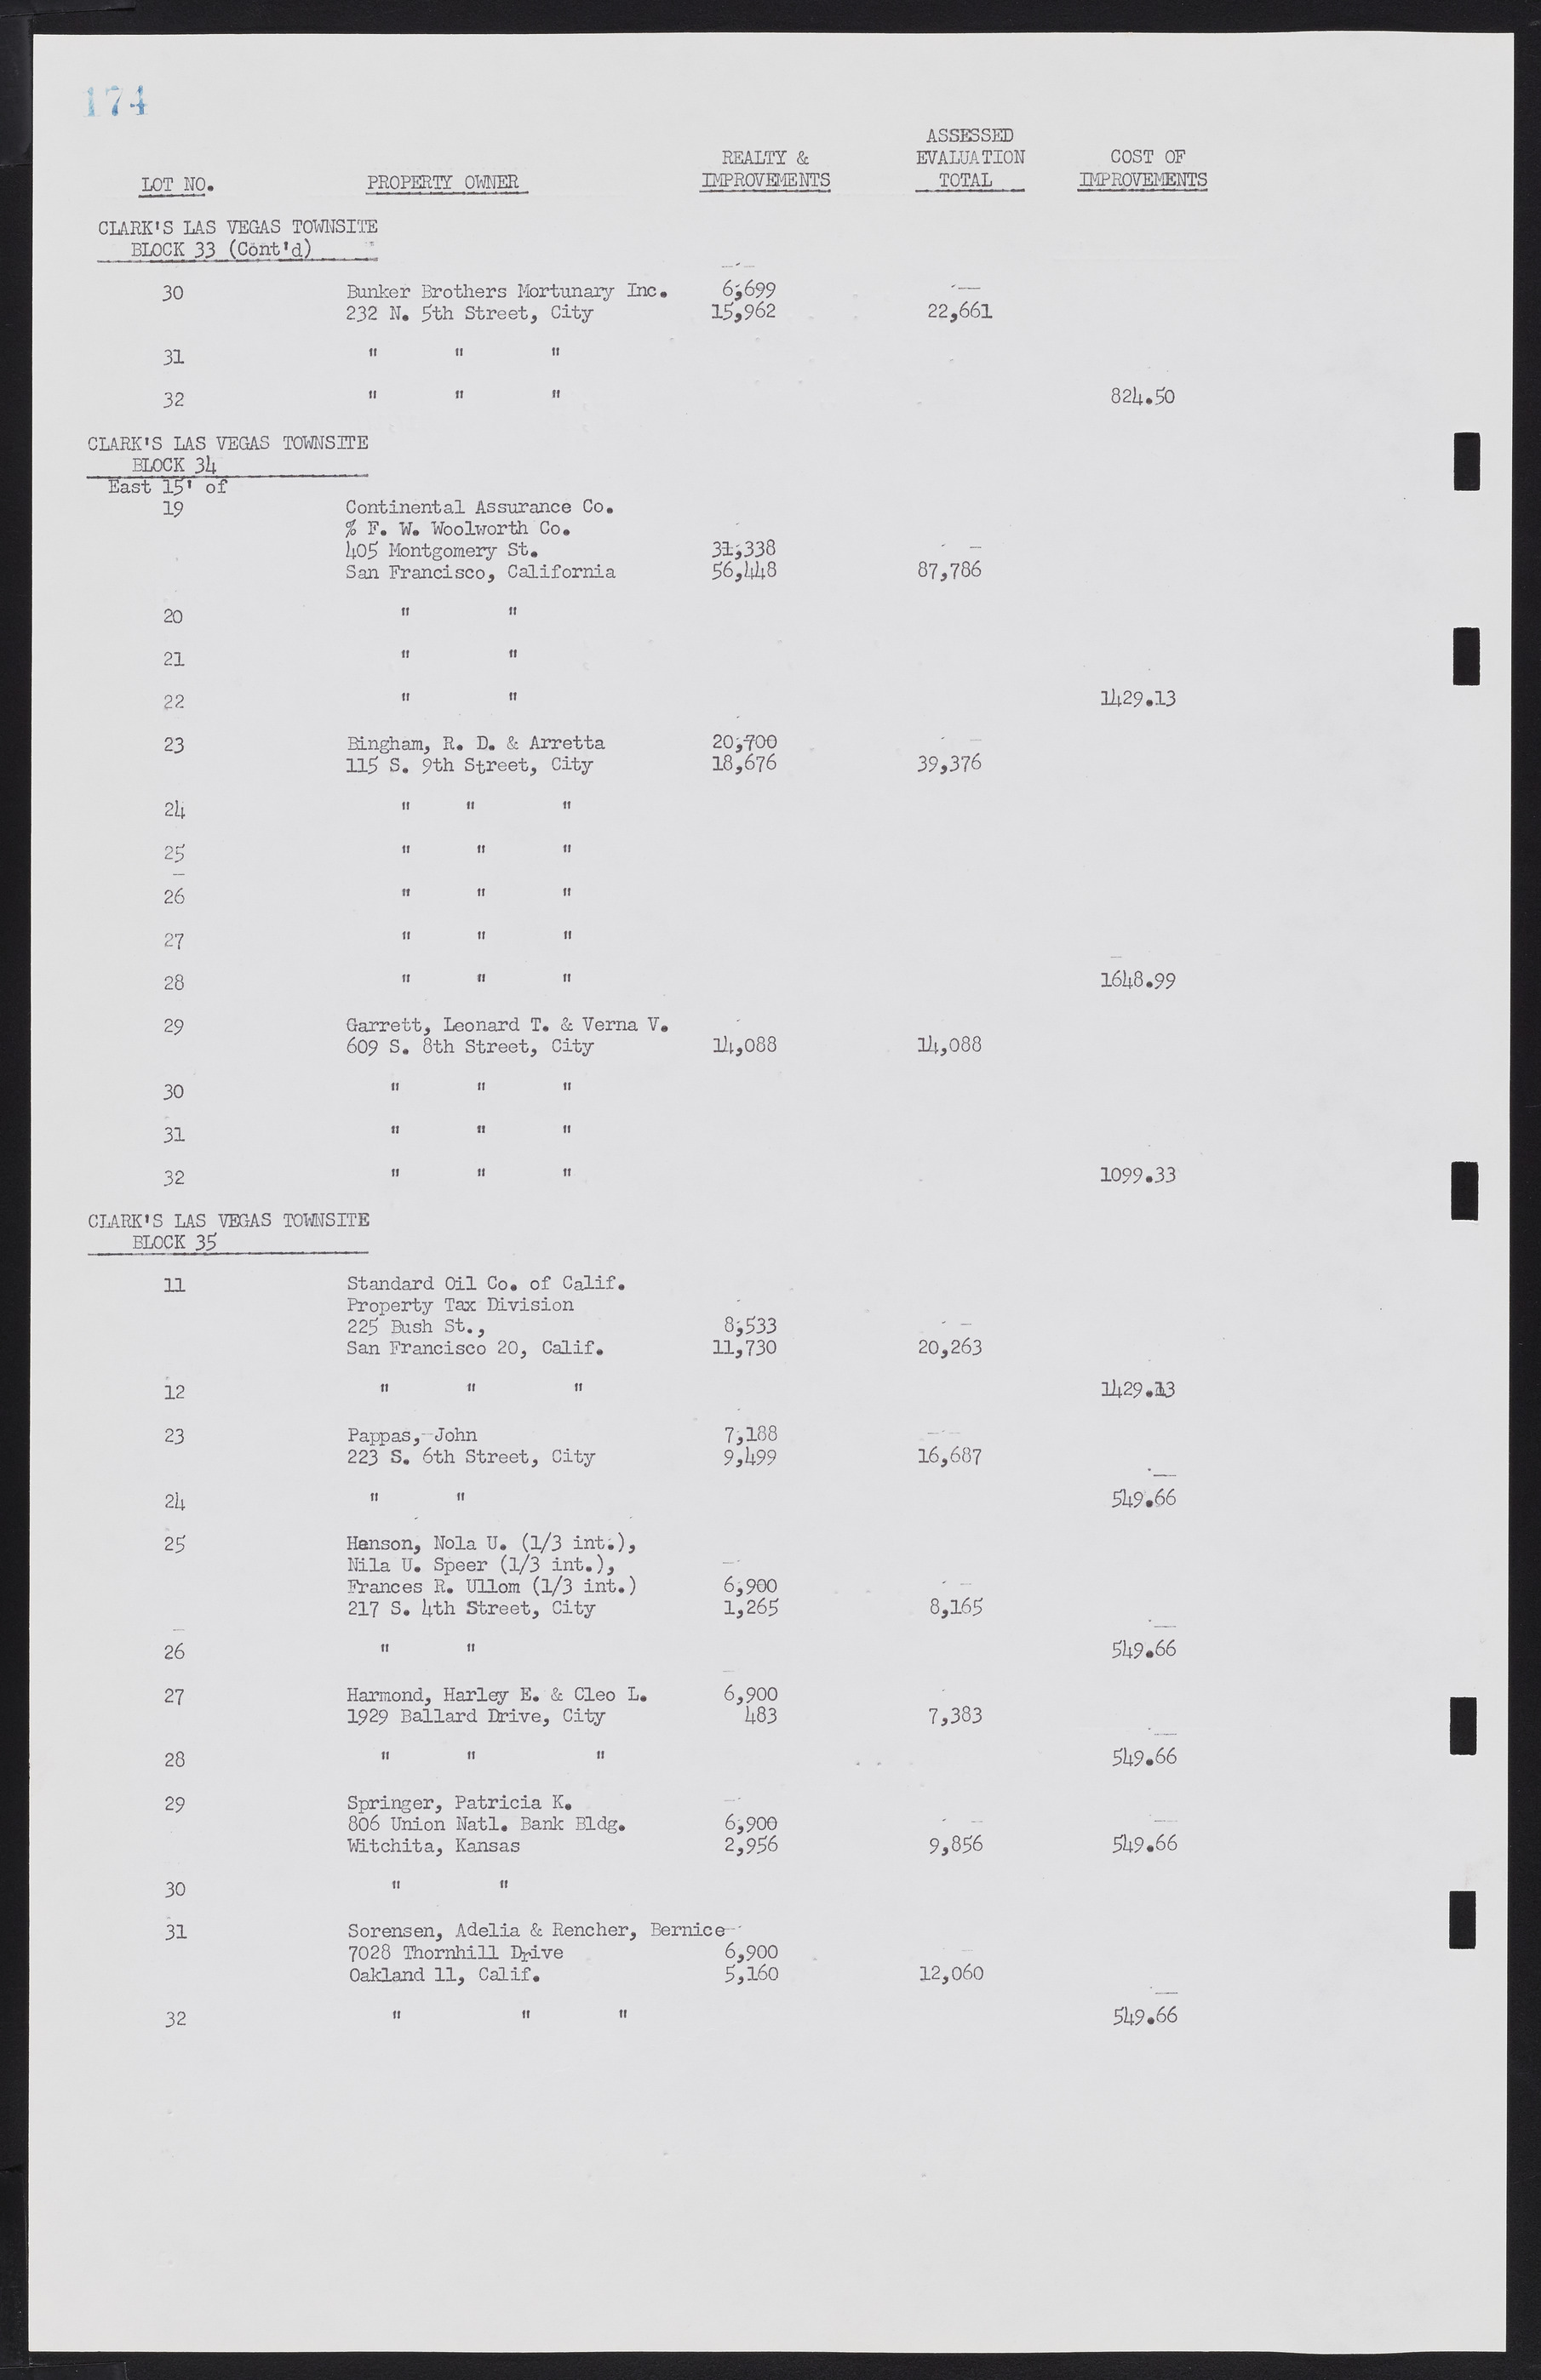 Las Vegas City Commission Minutes, February 17, 1954 to September 21, 1955, lvc000009-180